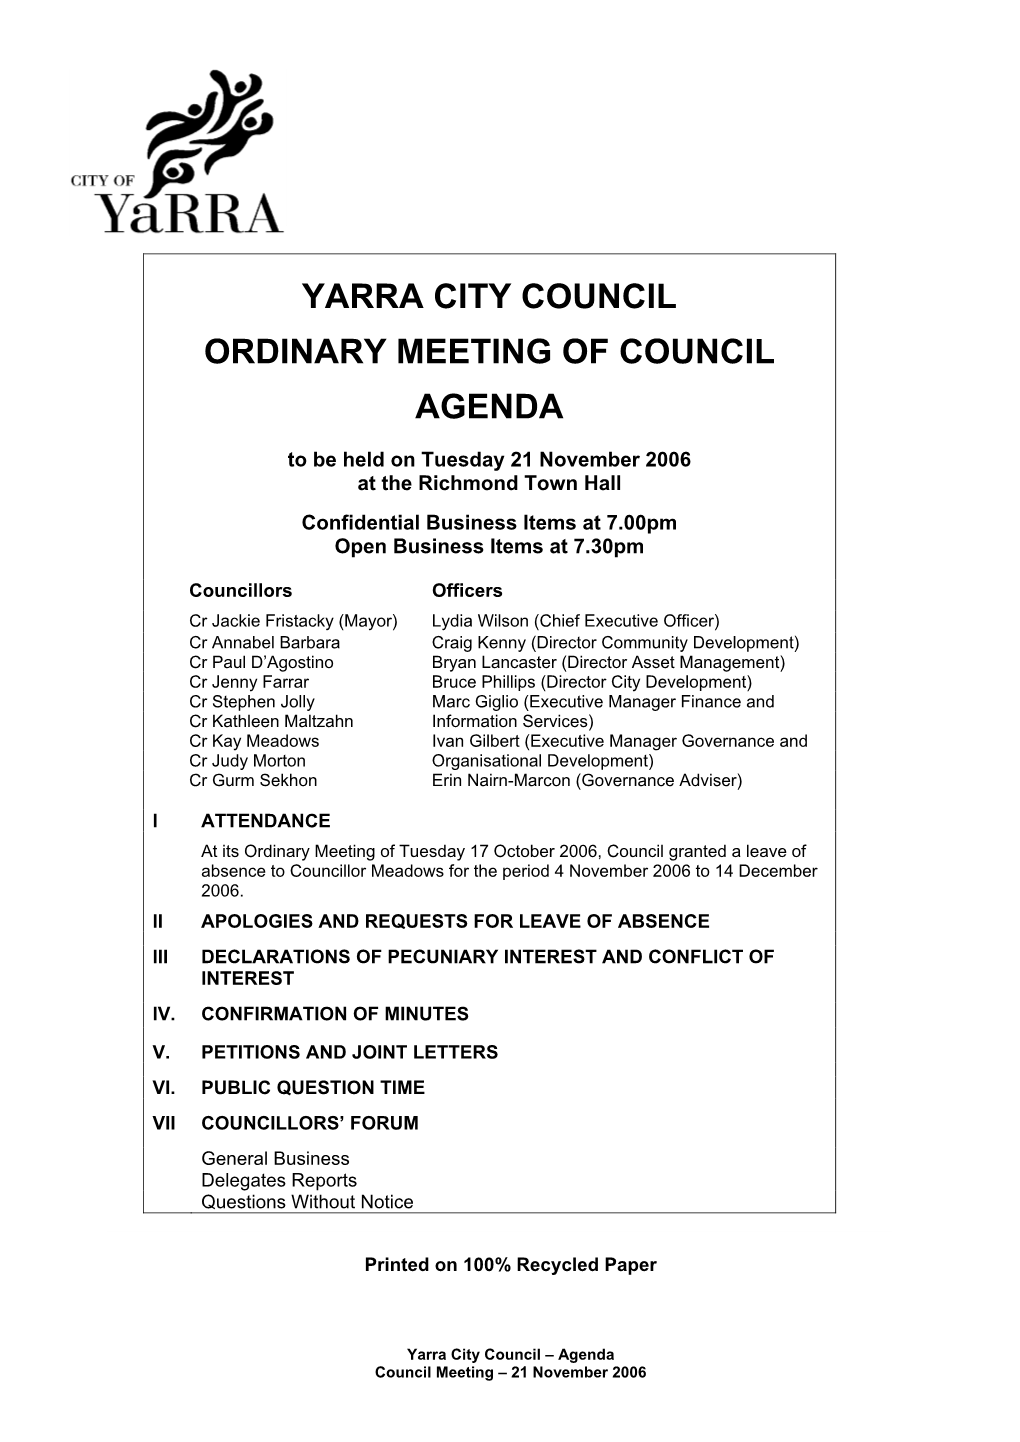 Yarra City Council Ordinary Meeting of Council Agenda